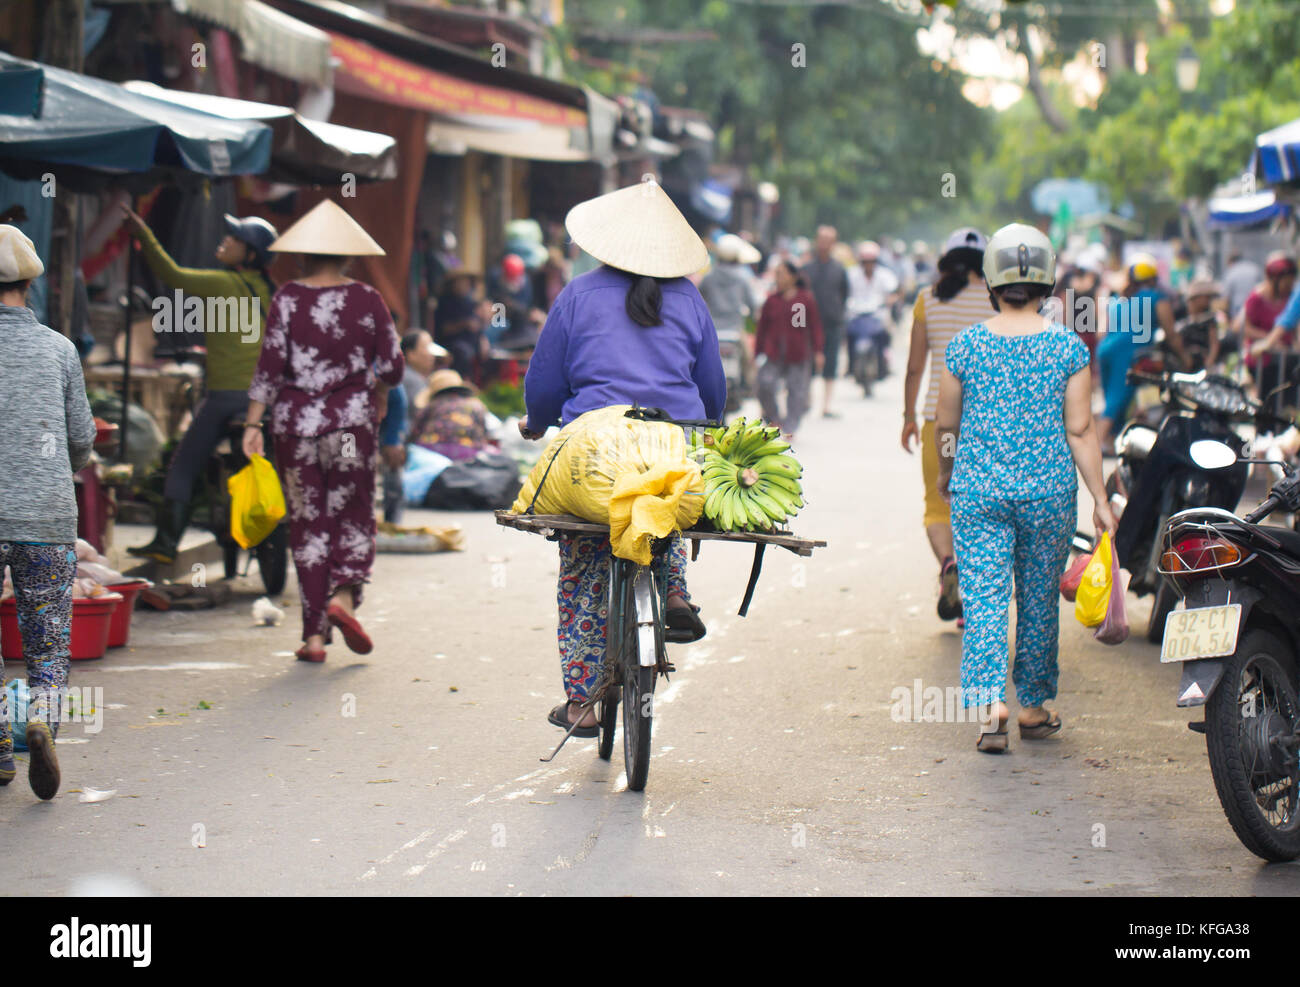 Saigon, Vietnam - June 30, 2017: Woman riding bike with fruit on street market, Saigon, Vietnam. Stock Photo